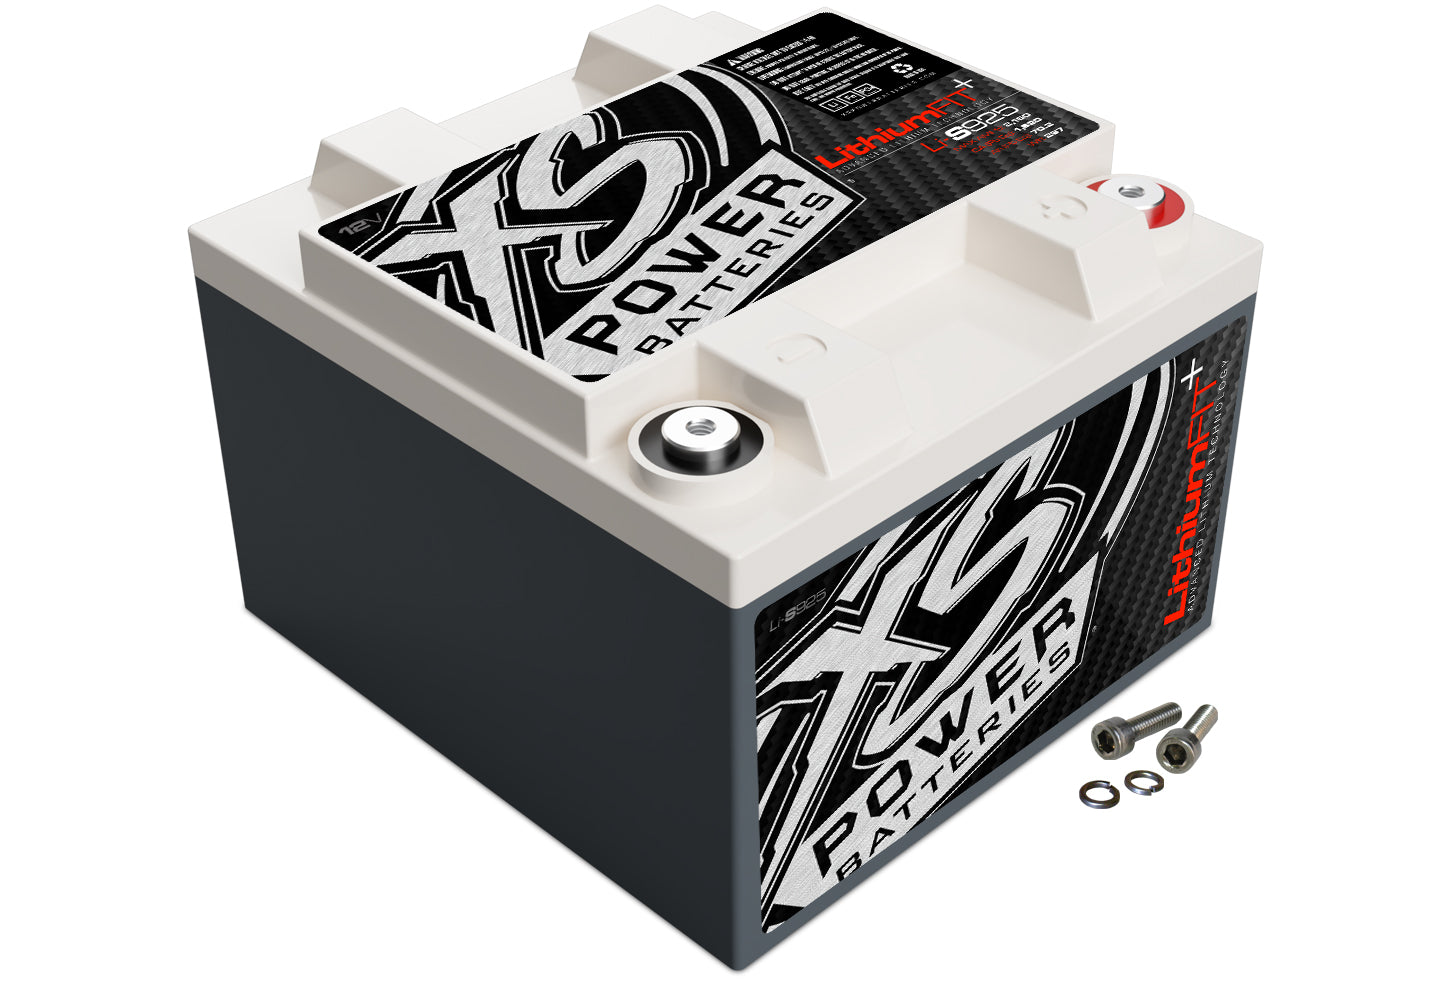 Li-S925 XS Power 12VDC Lithium Racing Battery 2160A 23.4Ah